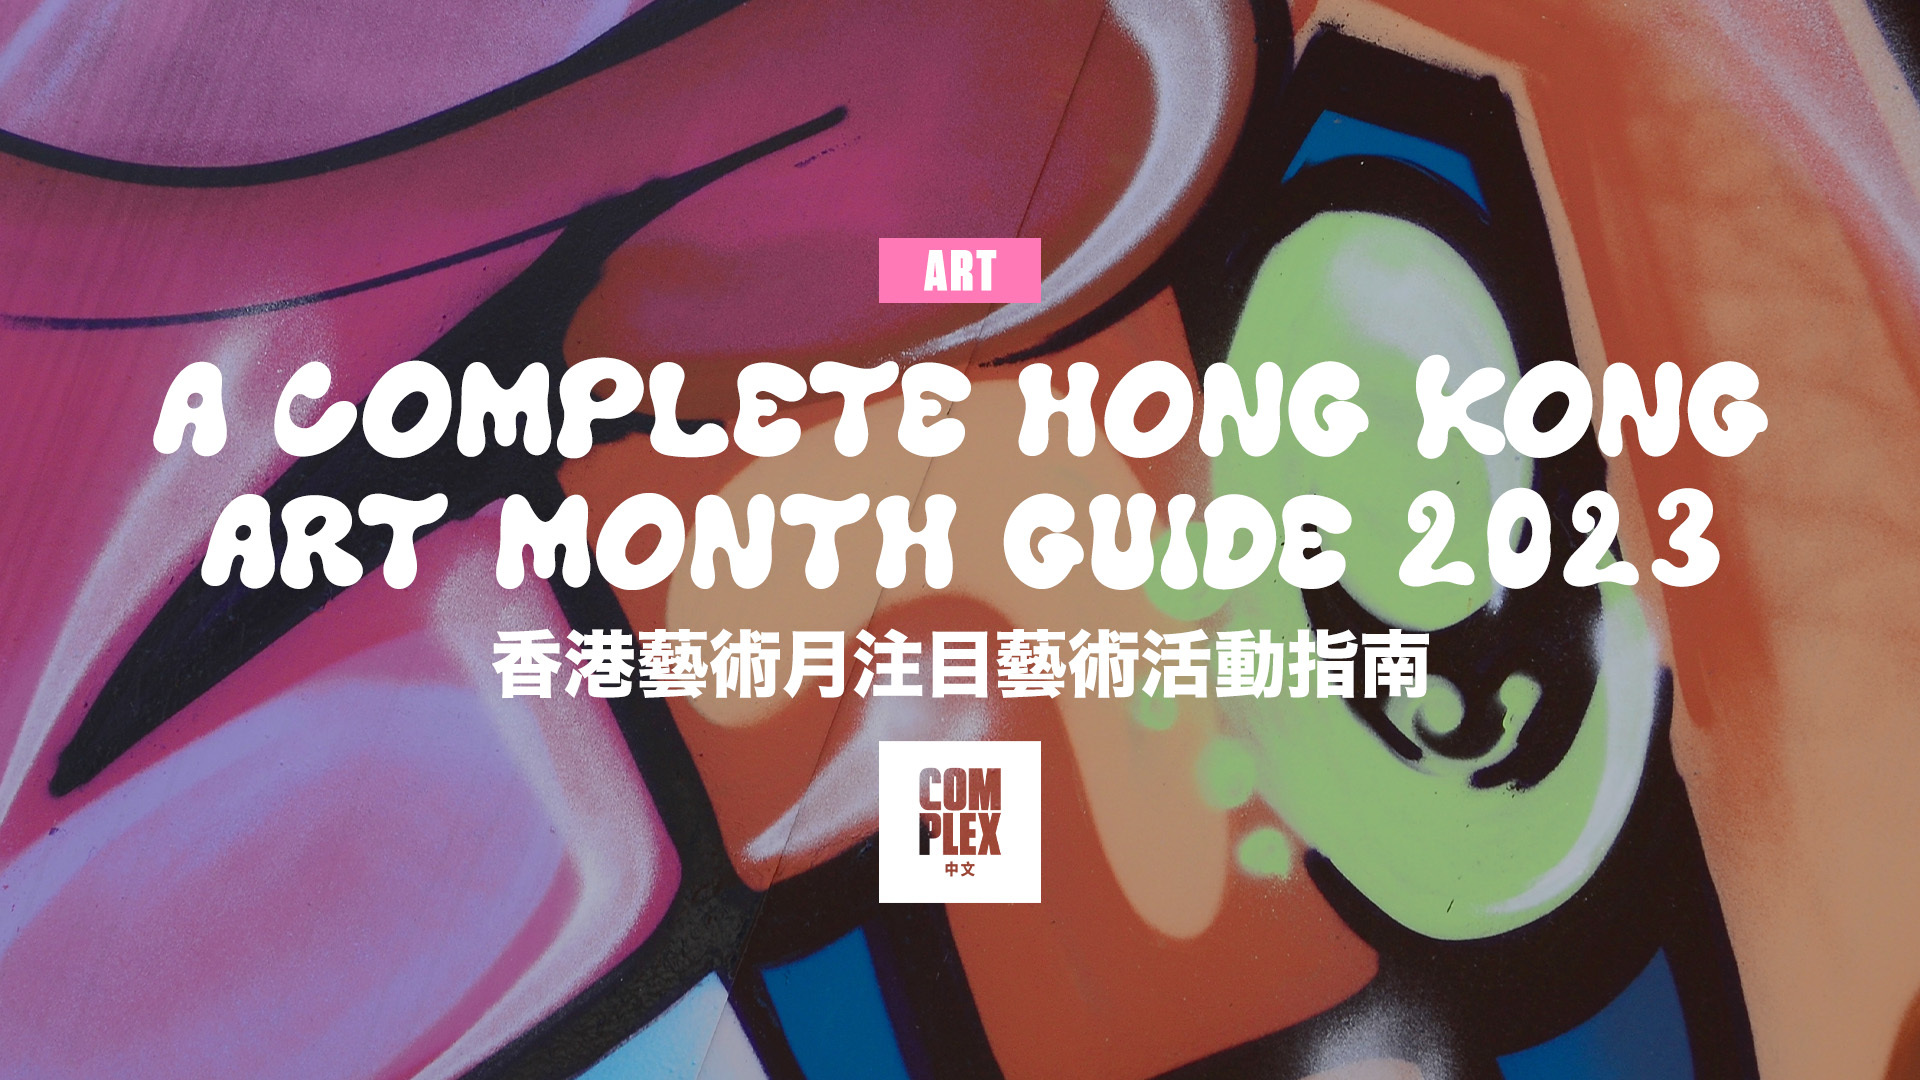 Complete Hong Kong Art Month Guide 香港藝術月注目藝術活動指南 2023 